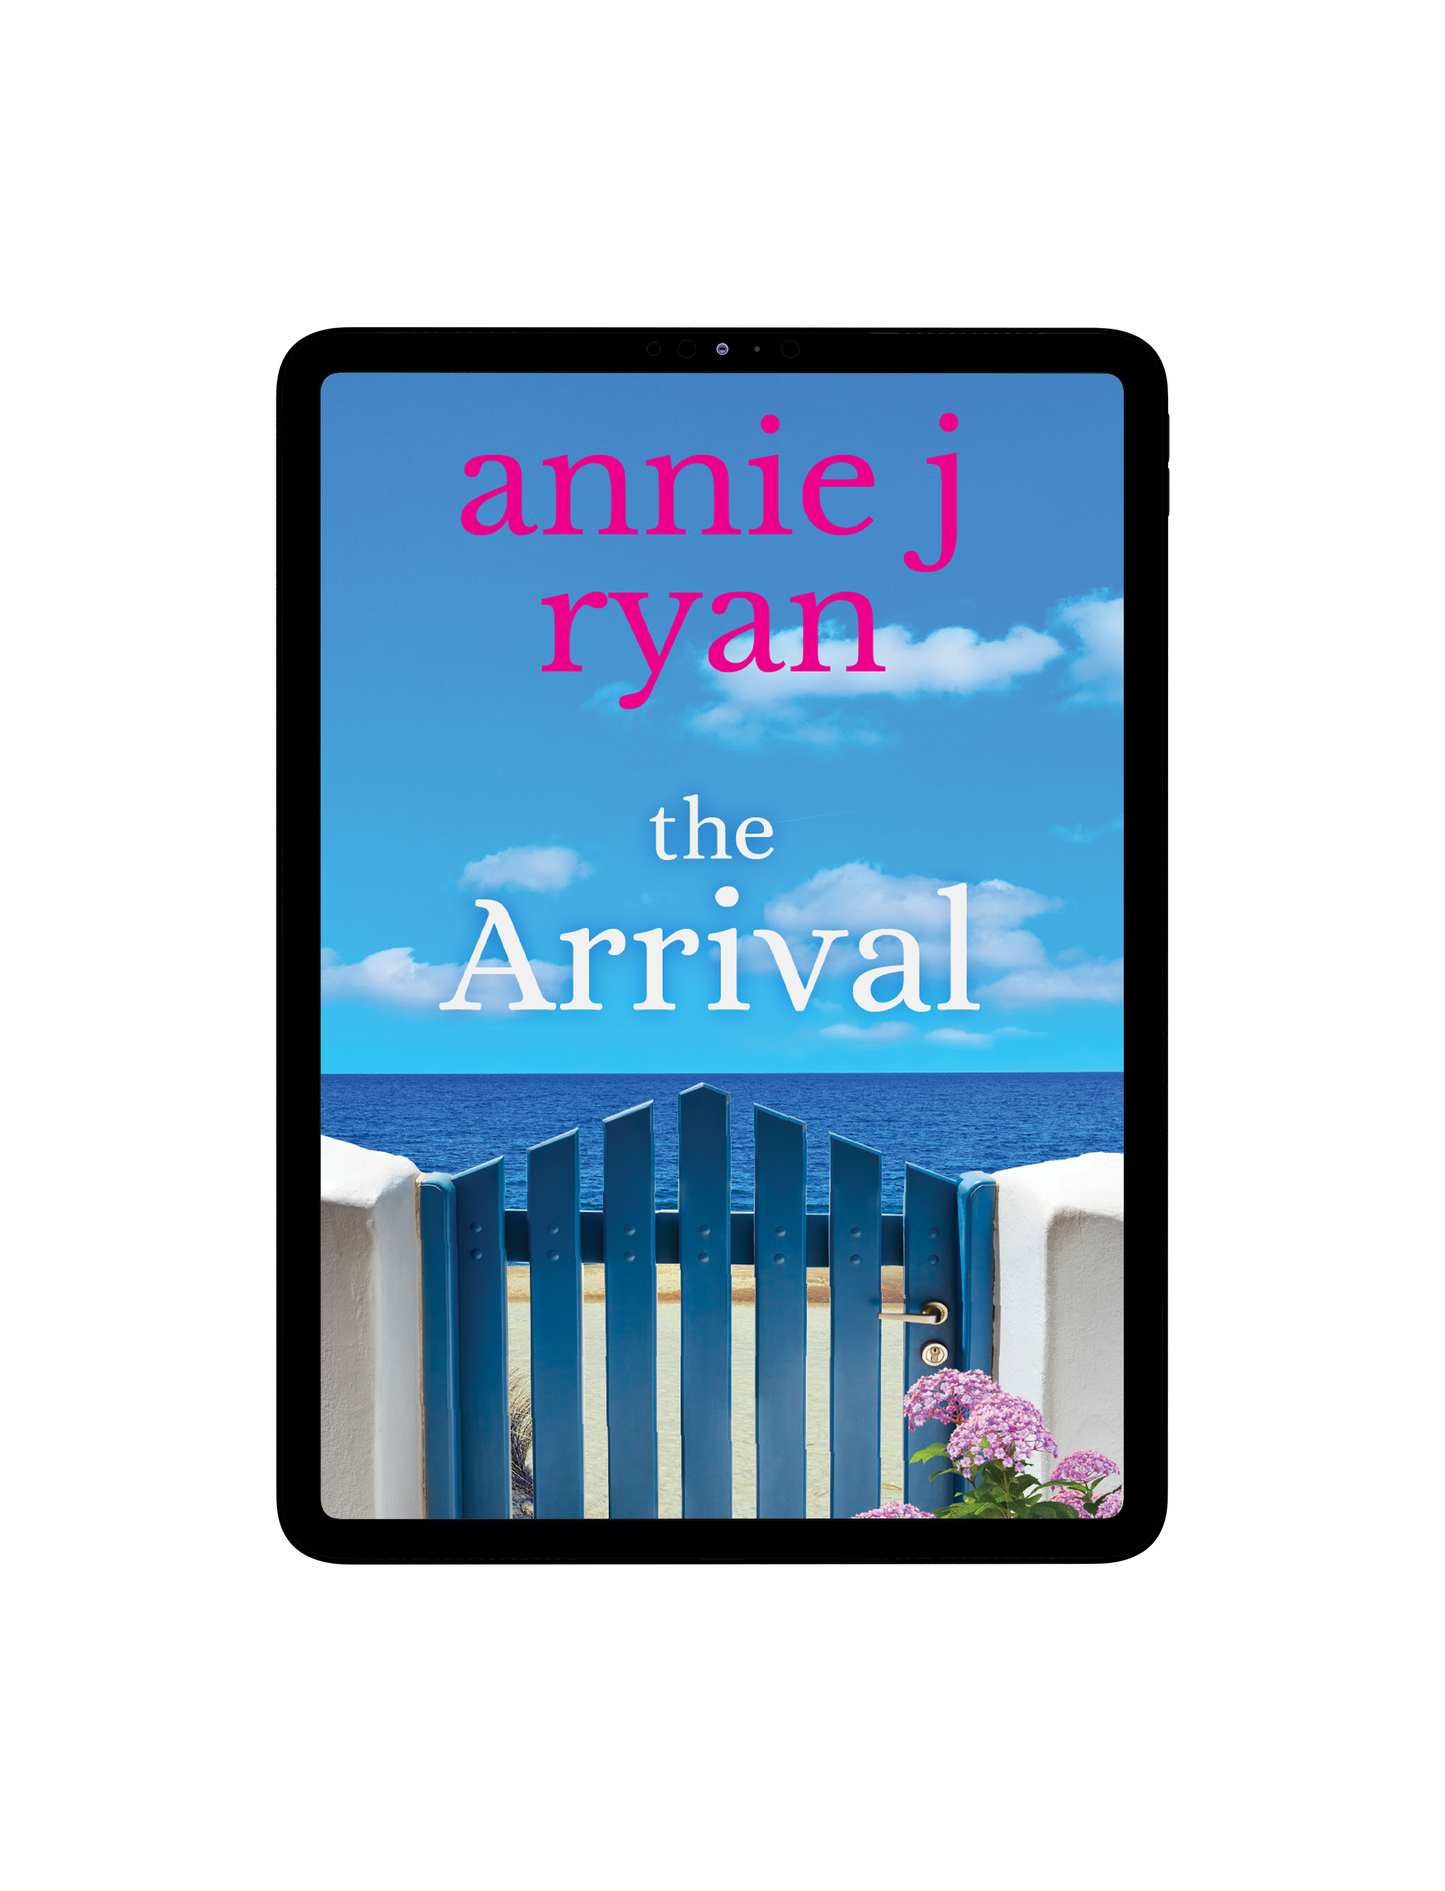 The Arrival, Annie J Ryan, Women's fiction, contemporary romance, romantic suspense, secrets, family life drama, friends, beach reads, book club reads, 